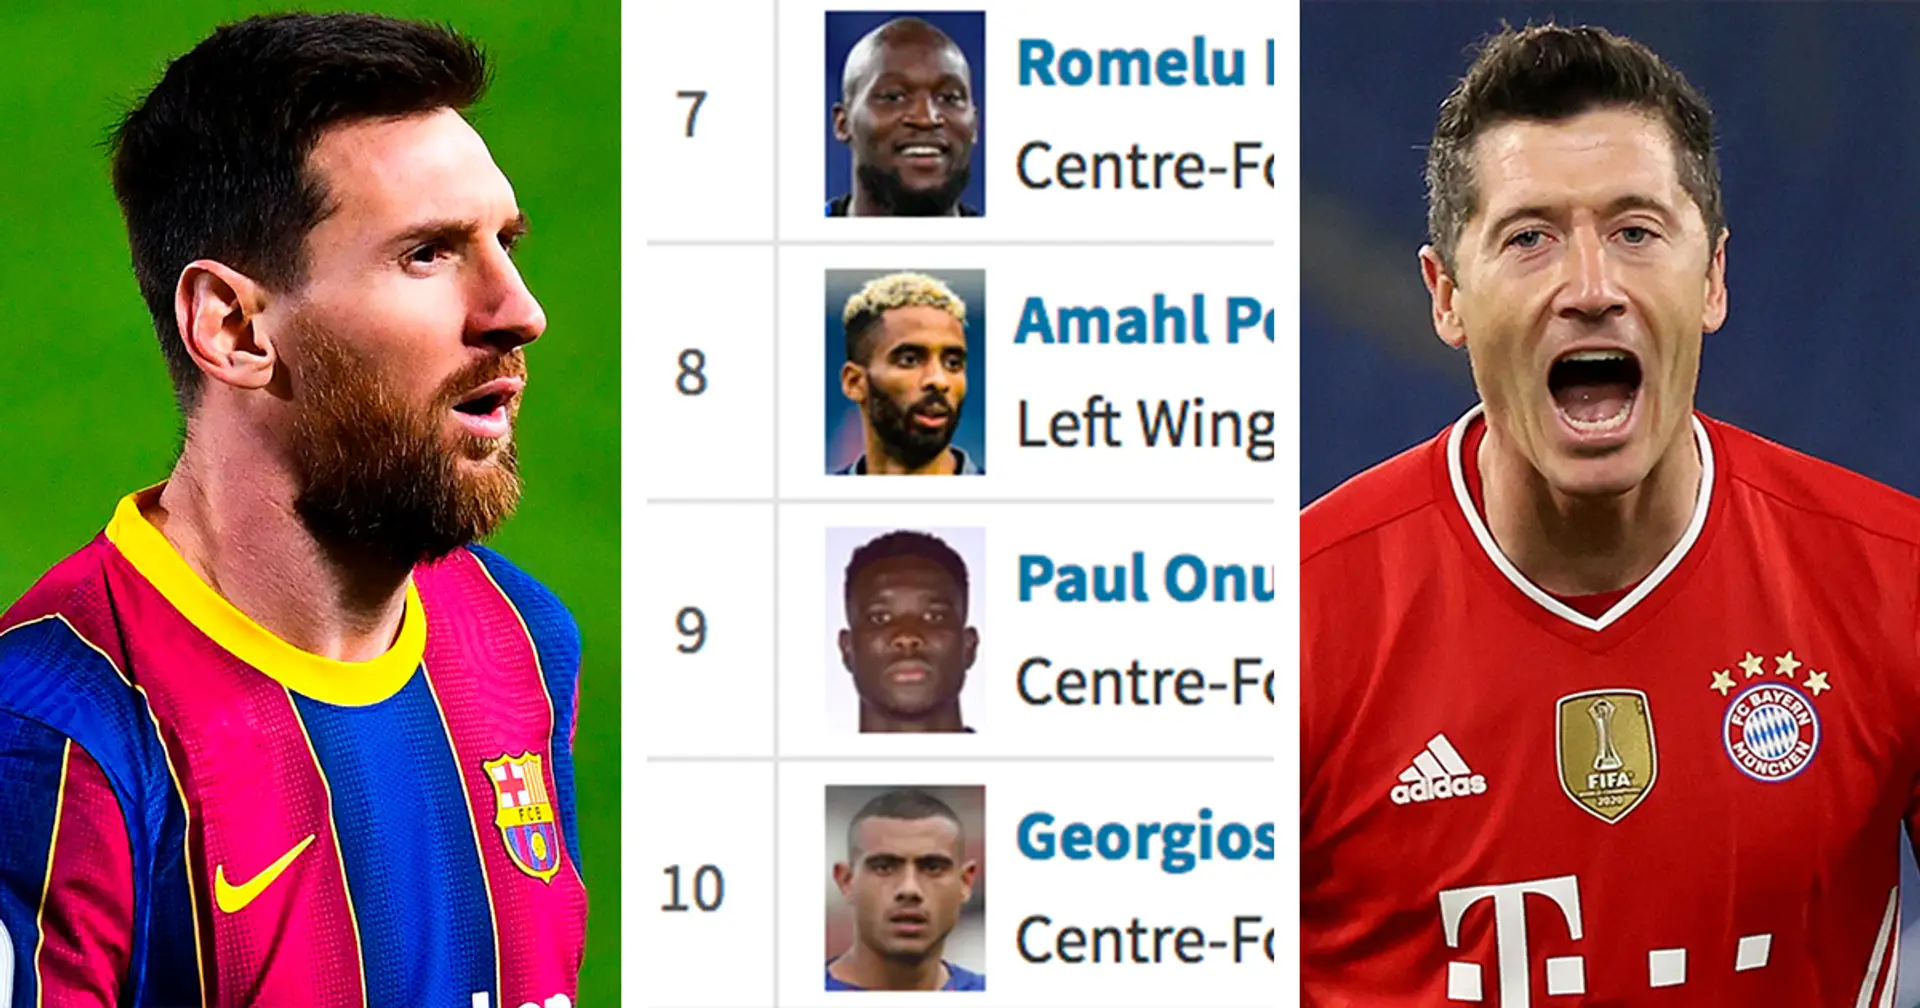 Messi gets closer to CR7 but still far behind Lewandowski: 2021 Golden Boot ranking as it stands